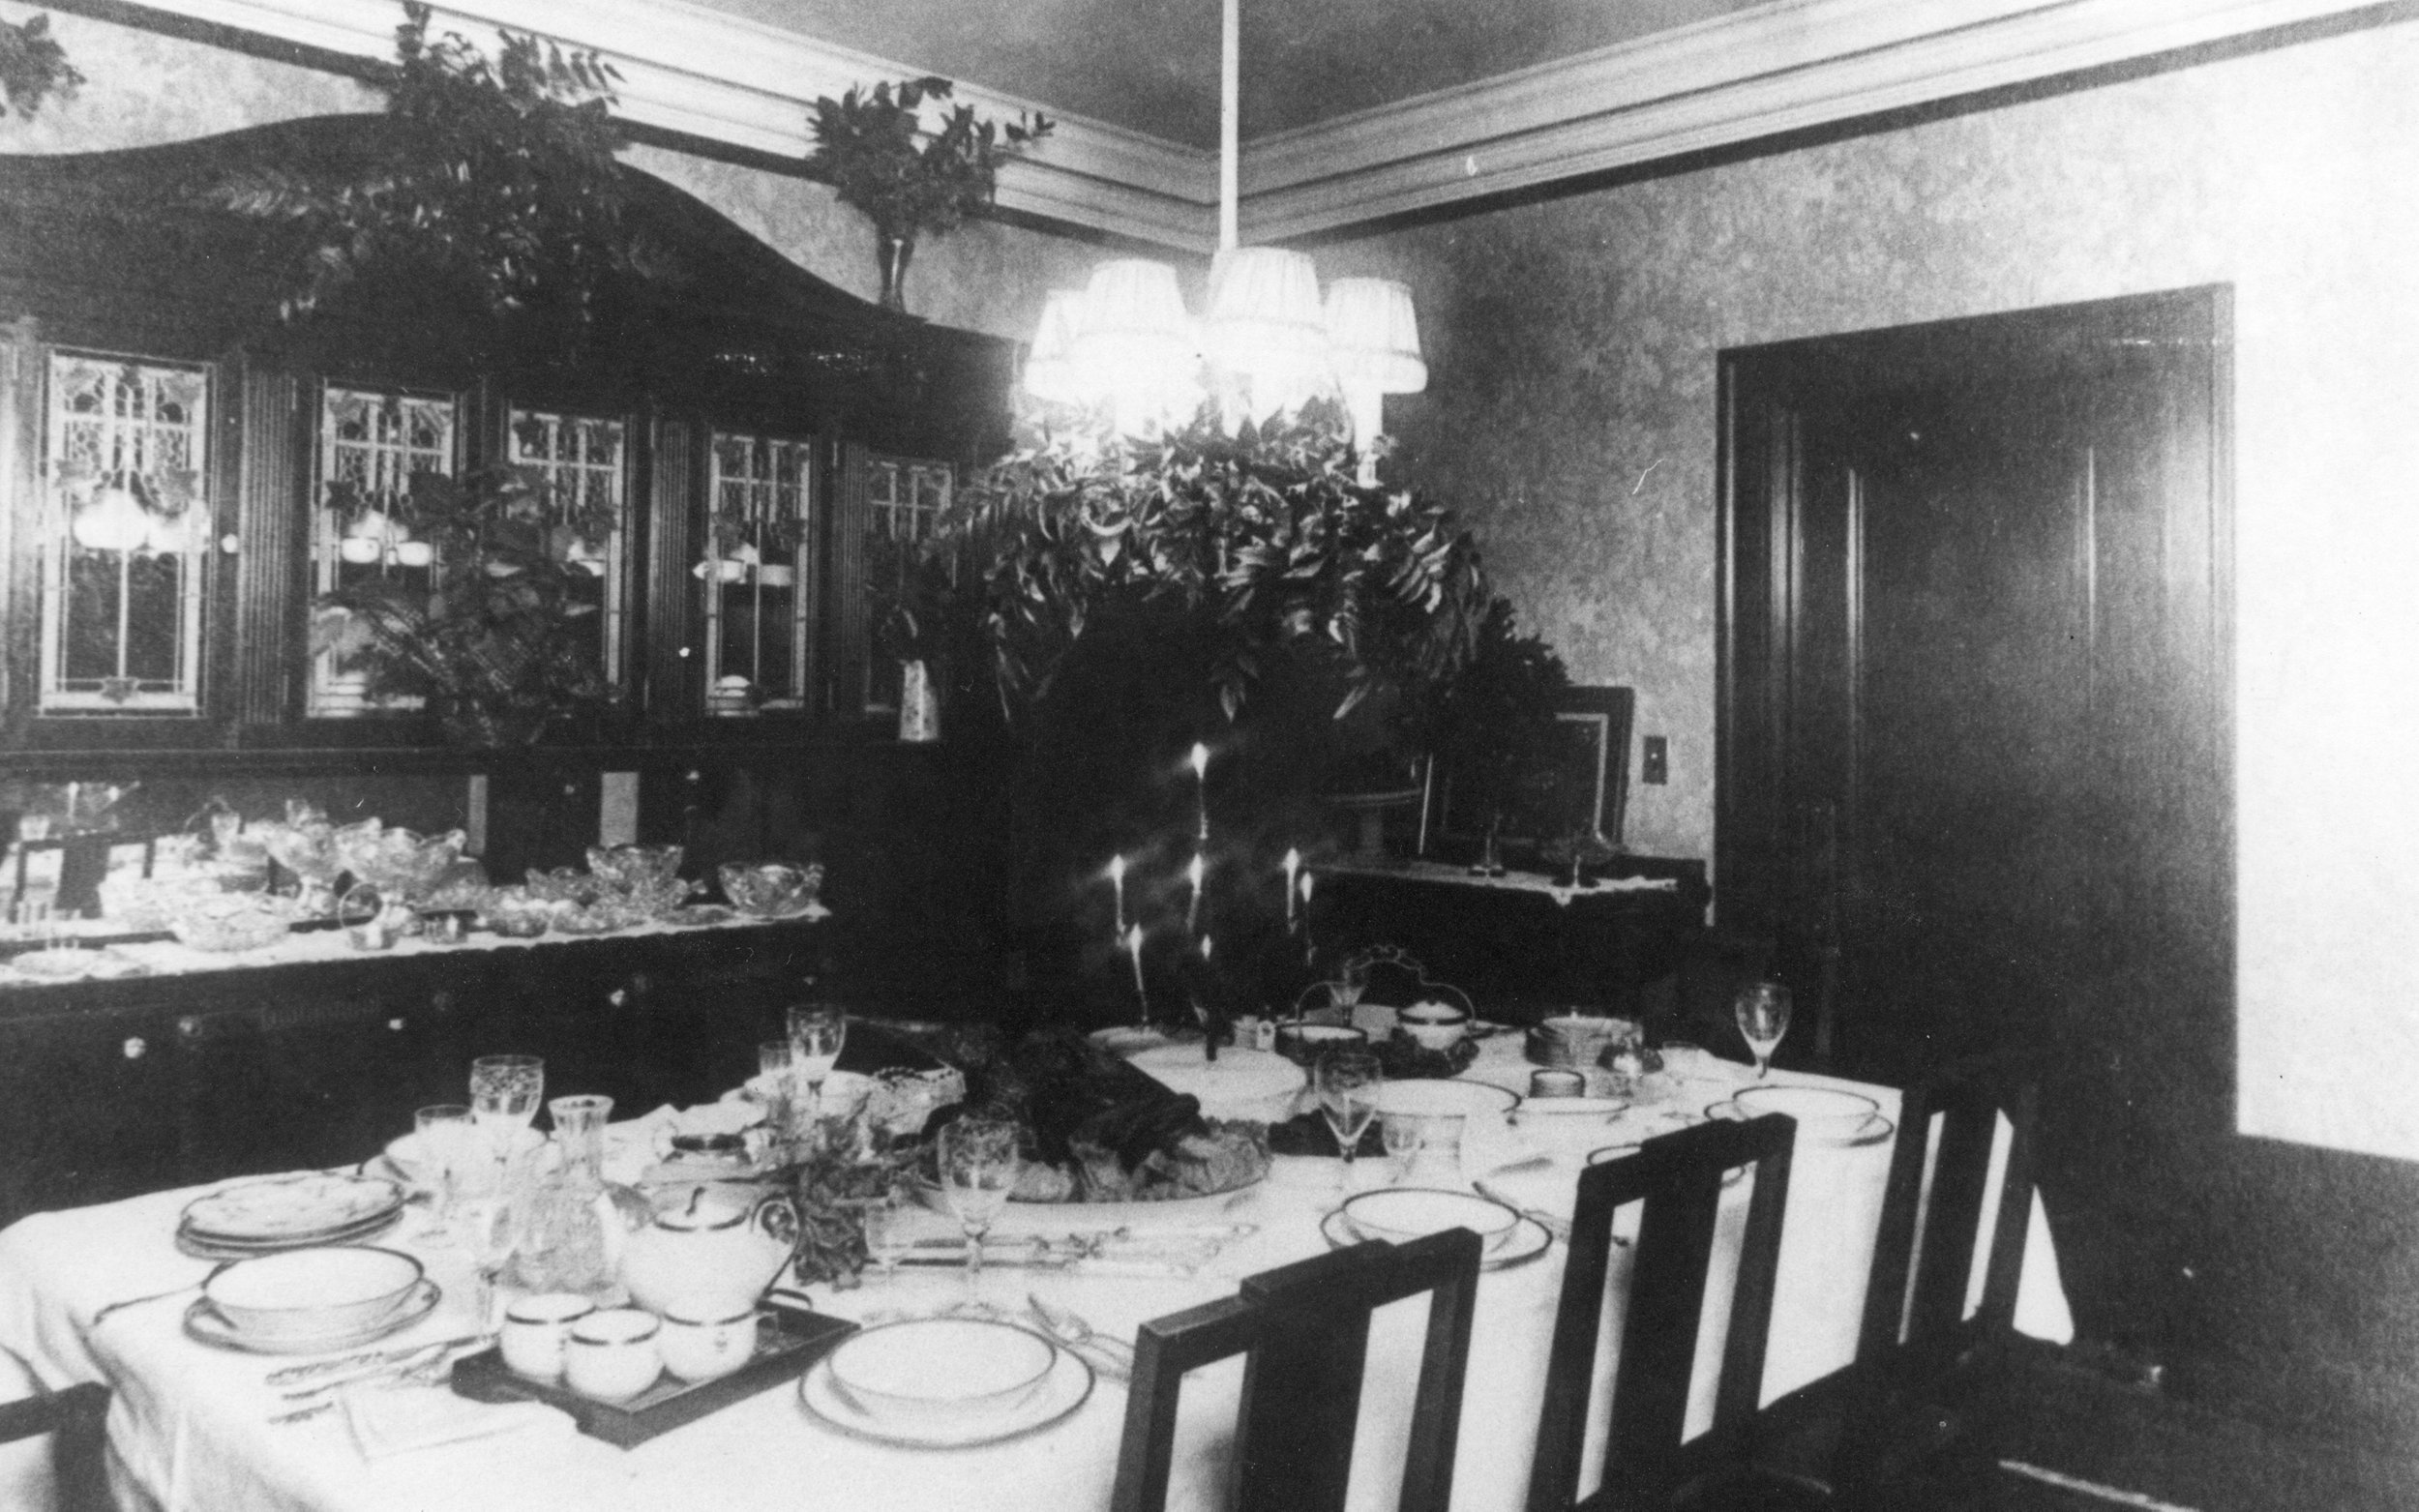  The dining room at the John Sinnot house set for Christmas dinner, ca., 1915.&nbsp; 